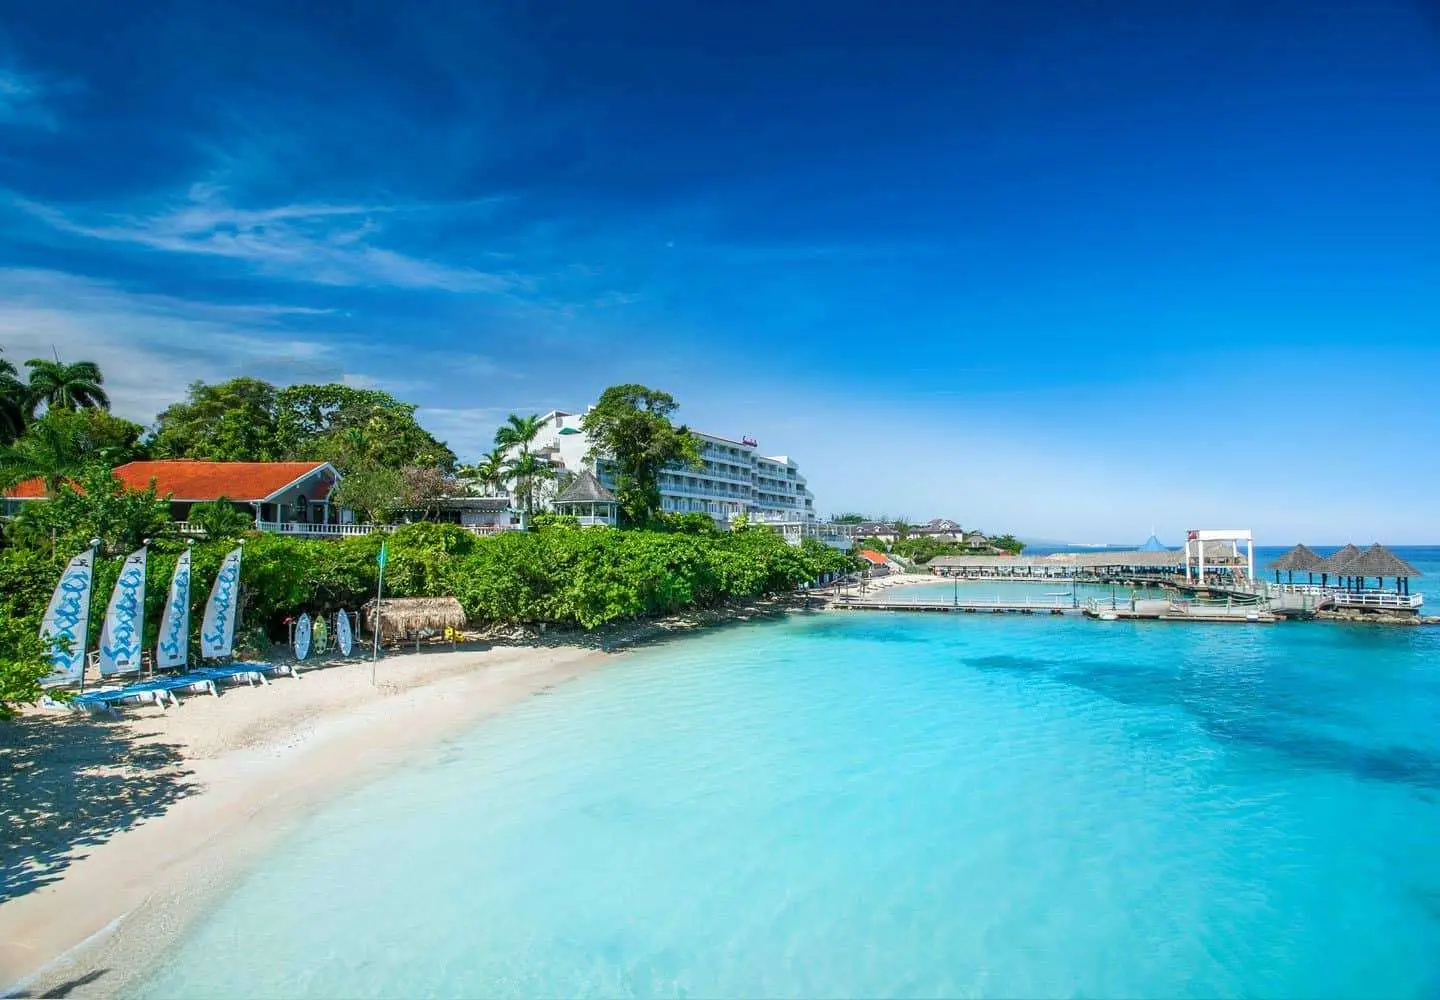 The new Sandals Ochi Beach Resort in Jamaica is a true Garden of Eden